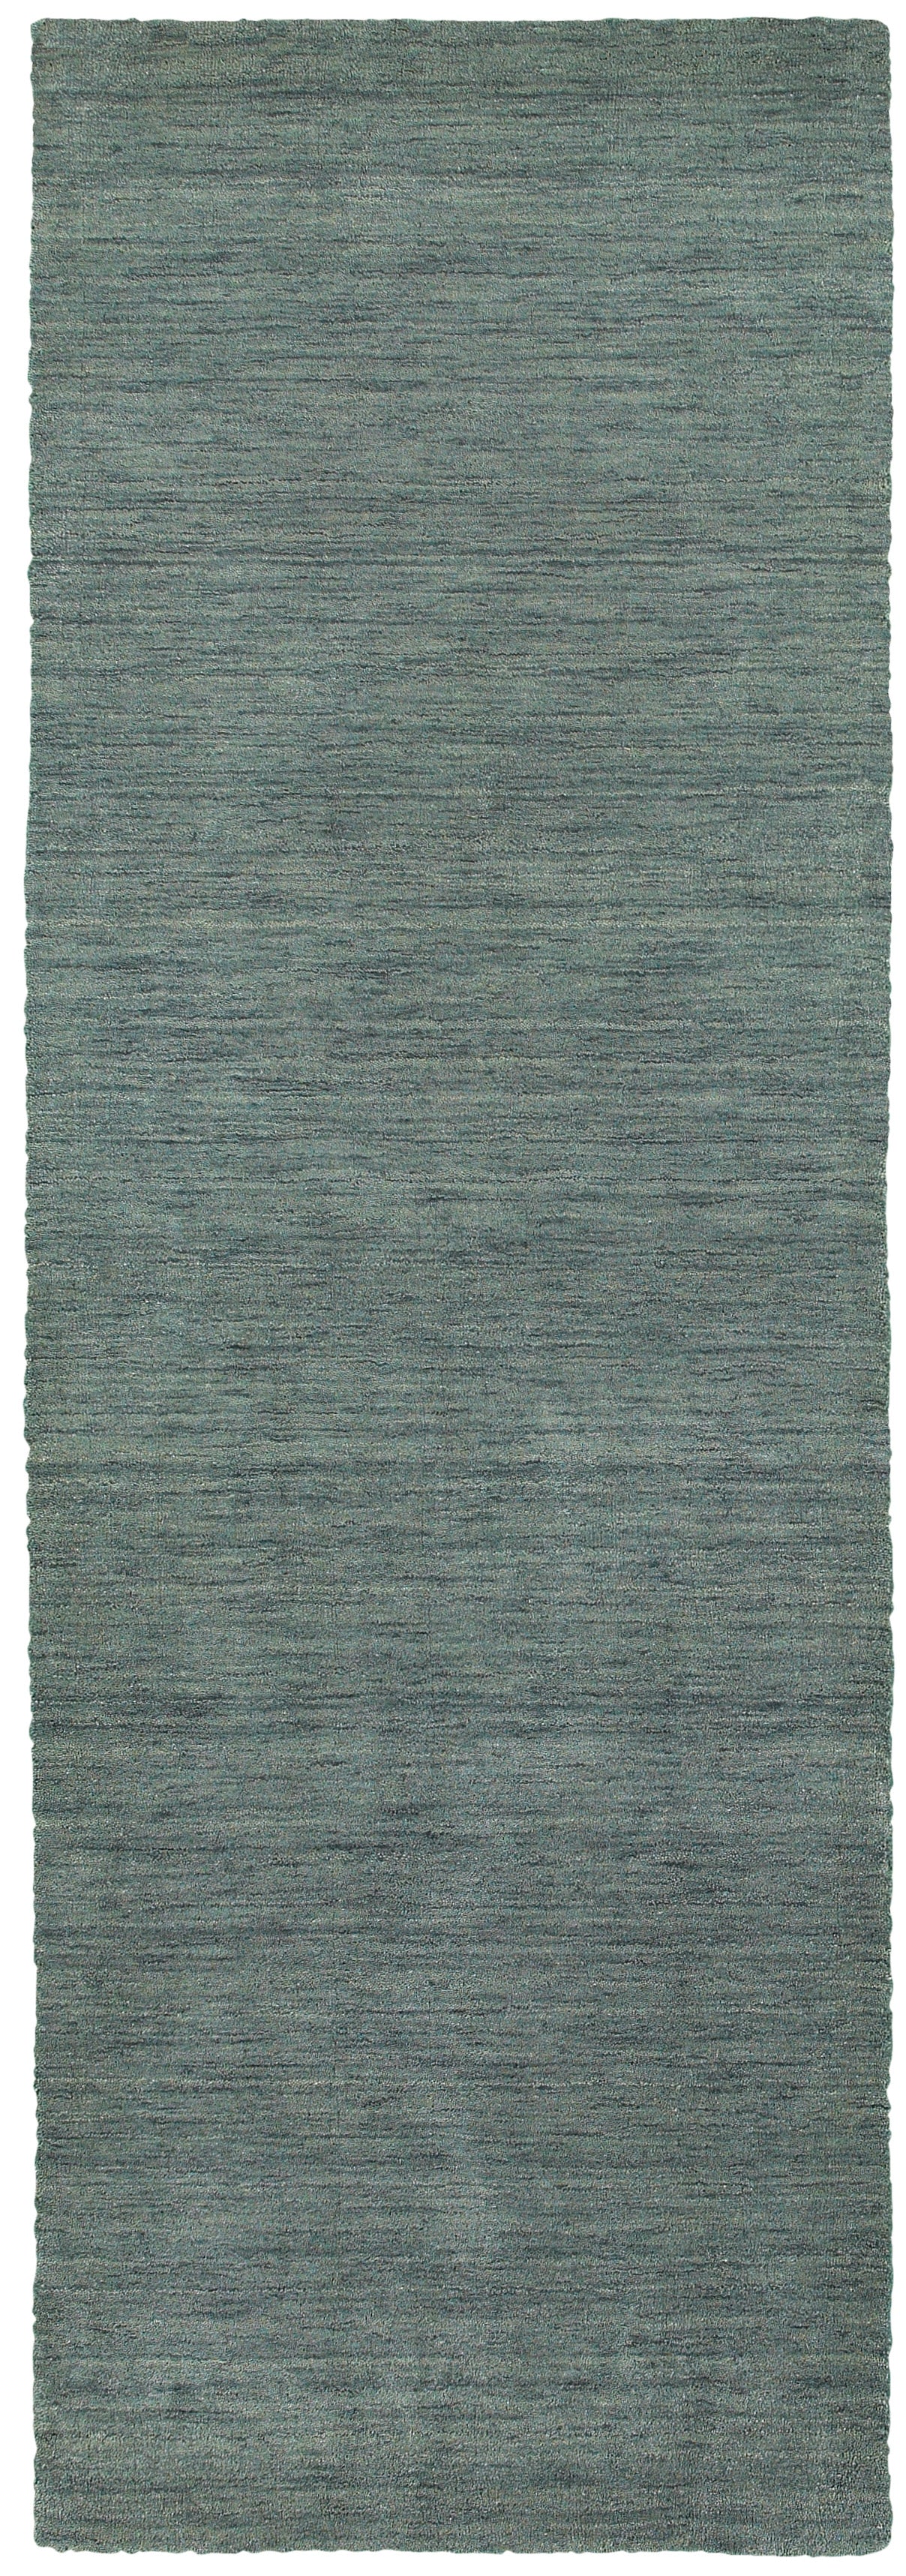 Oriental Weavers Aniston Blue Solid 27101 Area Rug